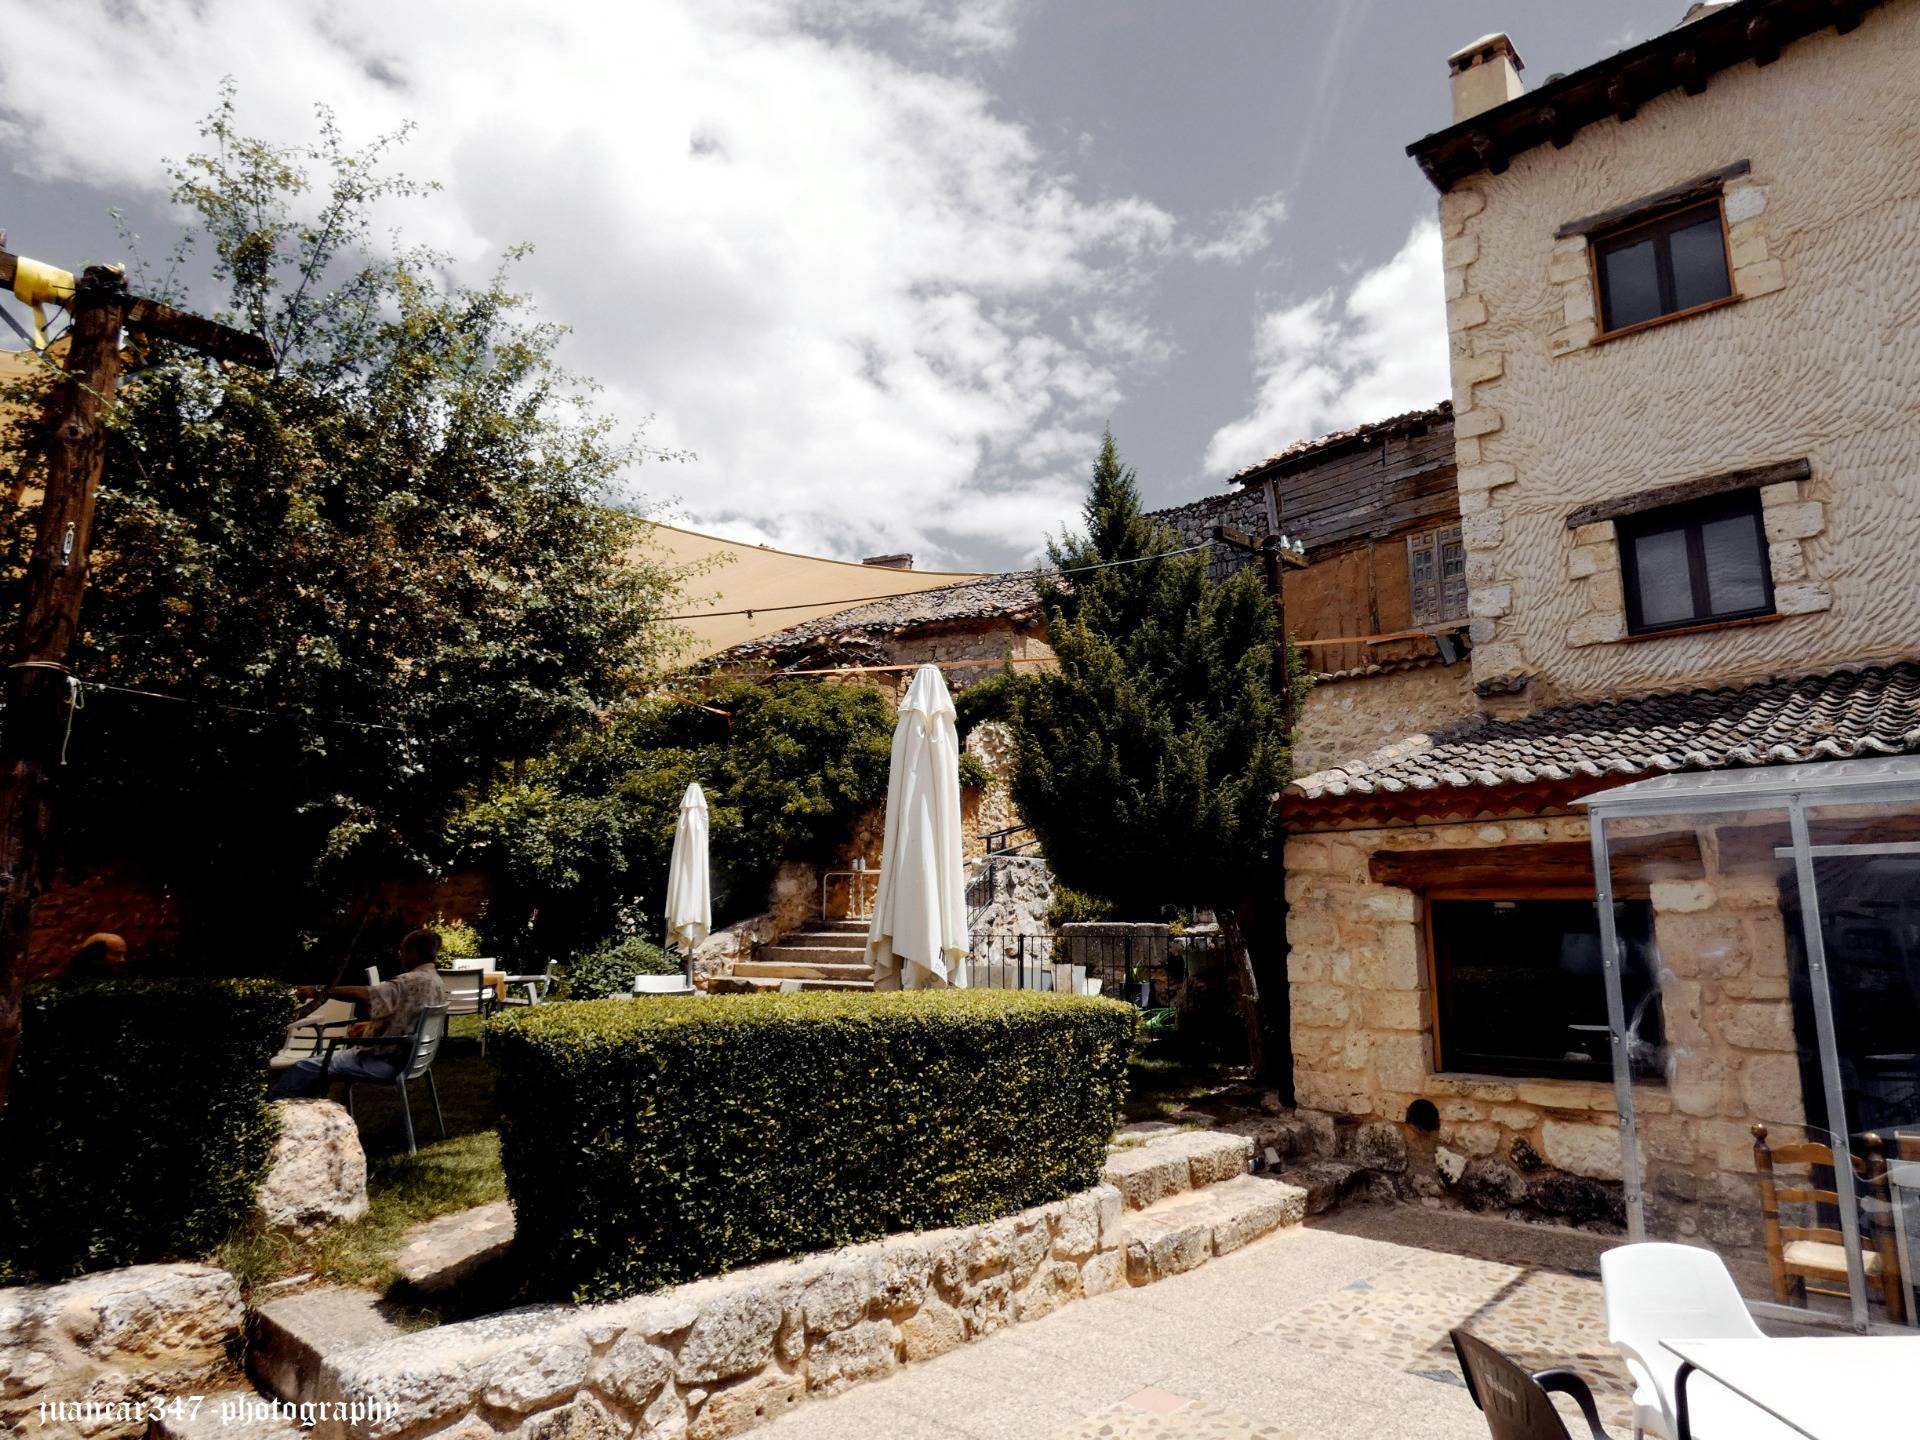 Maderuelo, Segovia: Eating at the Templars